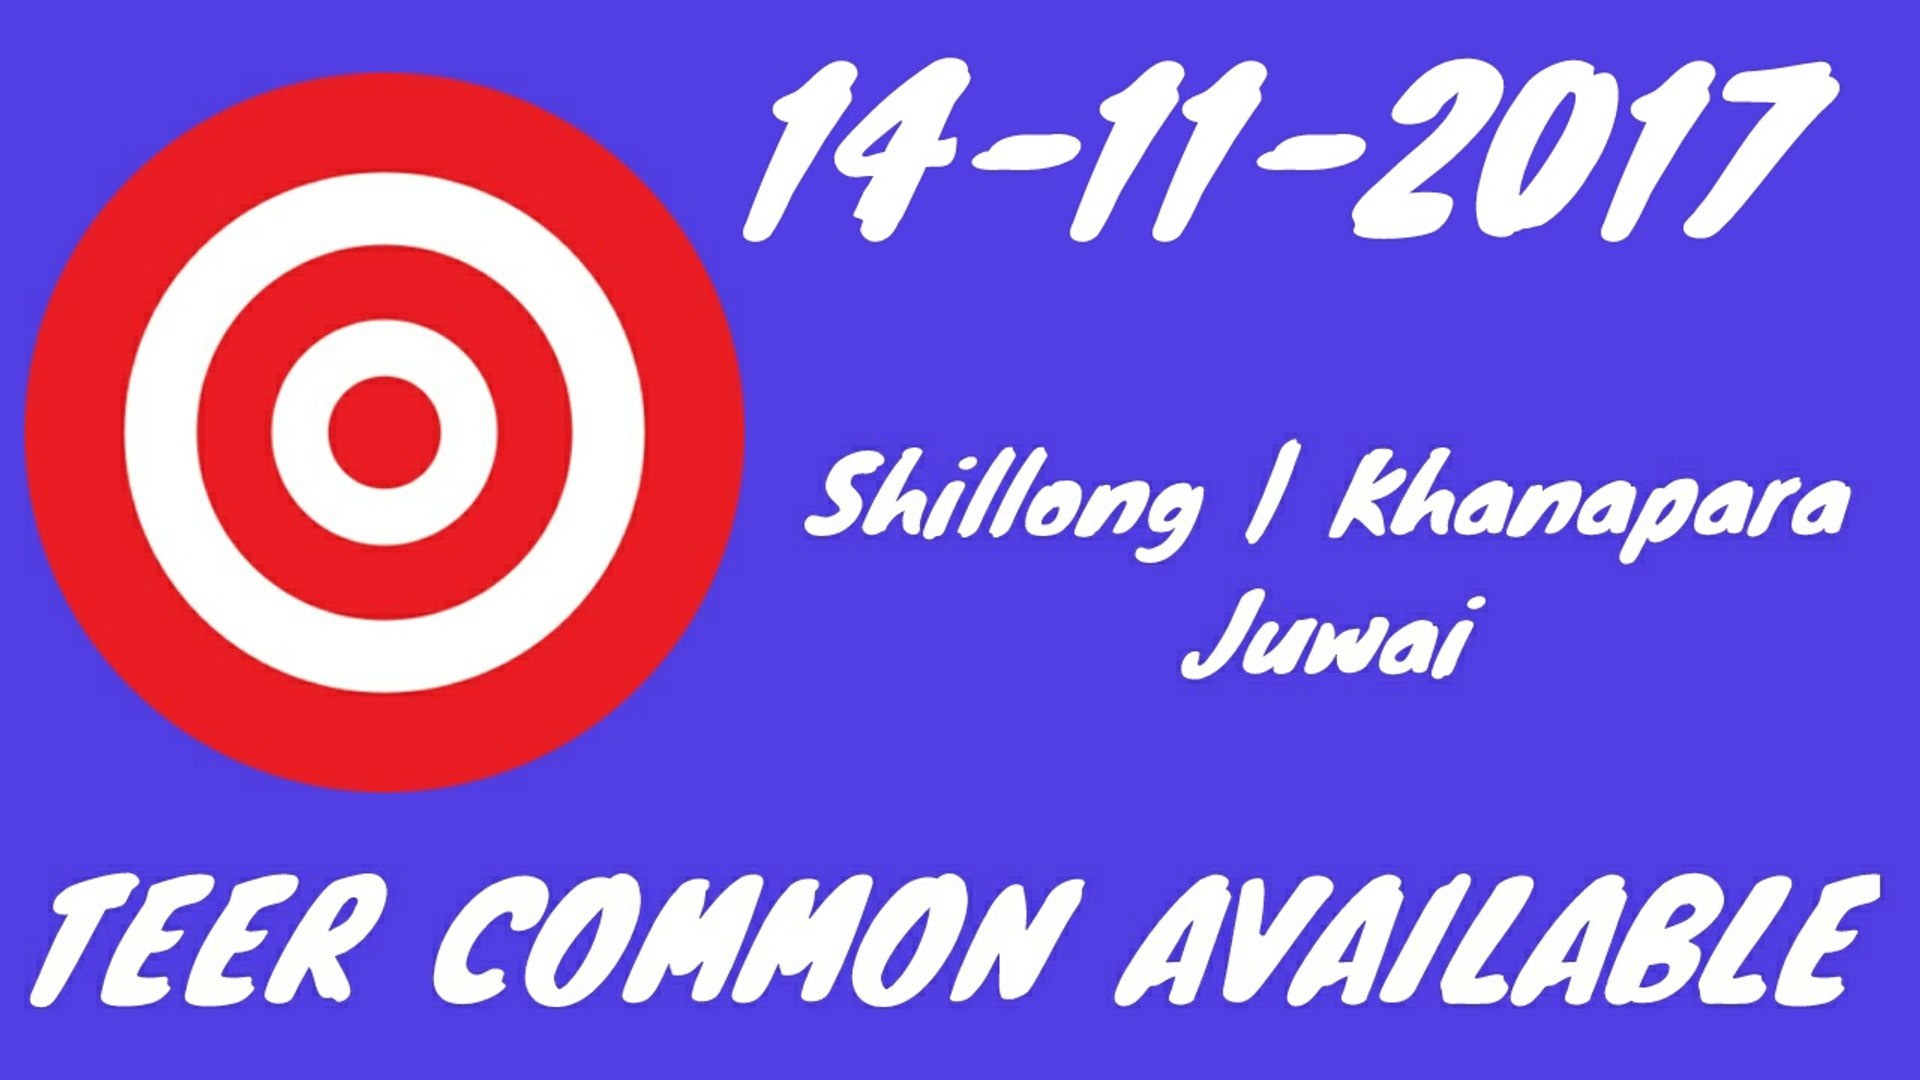 Teer Common Number of 14/11/2017 Shillong | Khanapara | Juwai | Guwahati  Teer - video Dailymotion